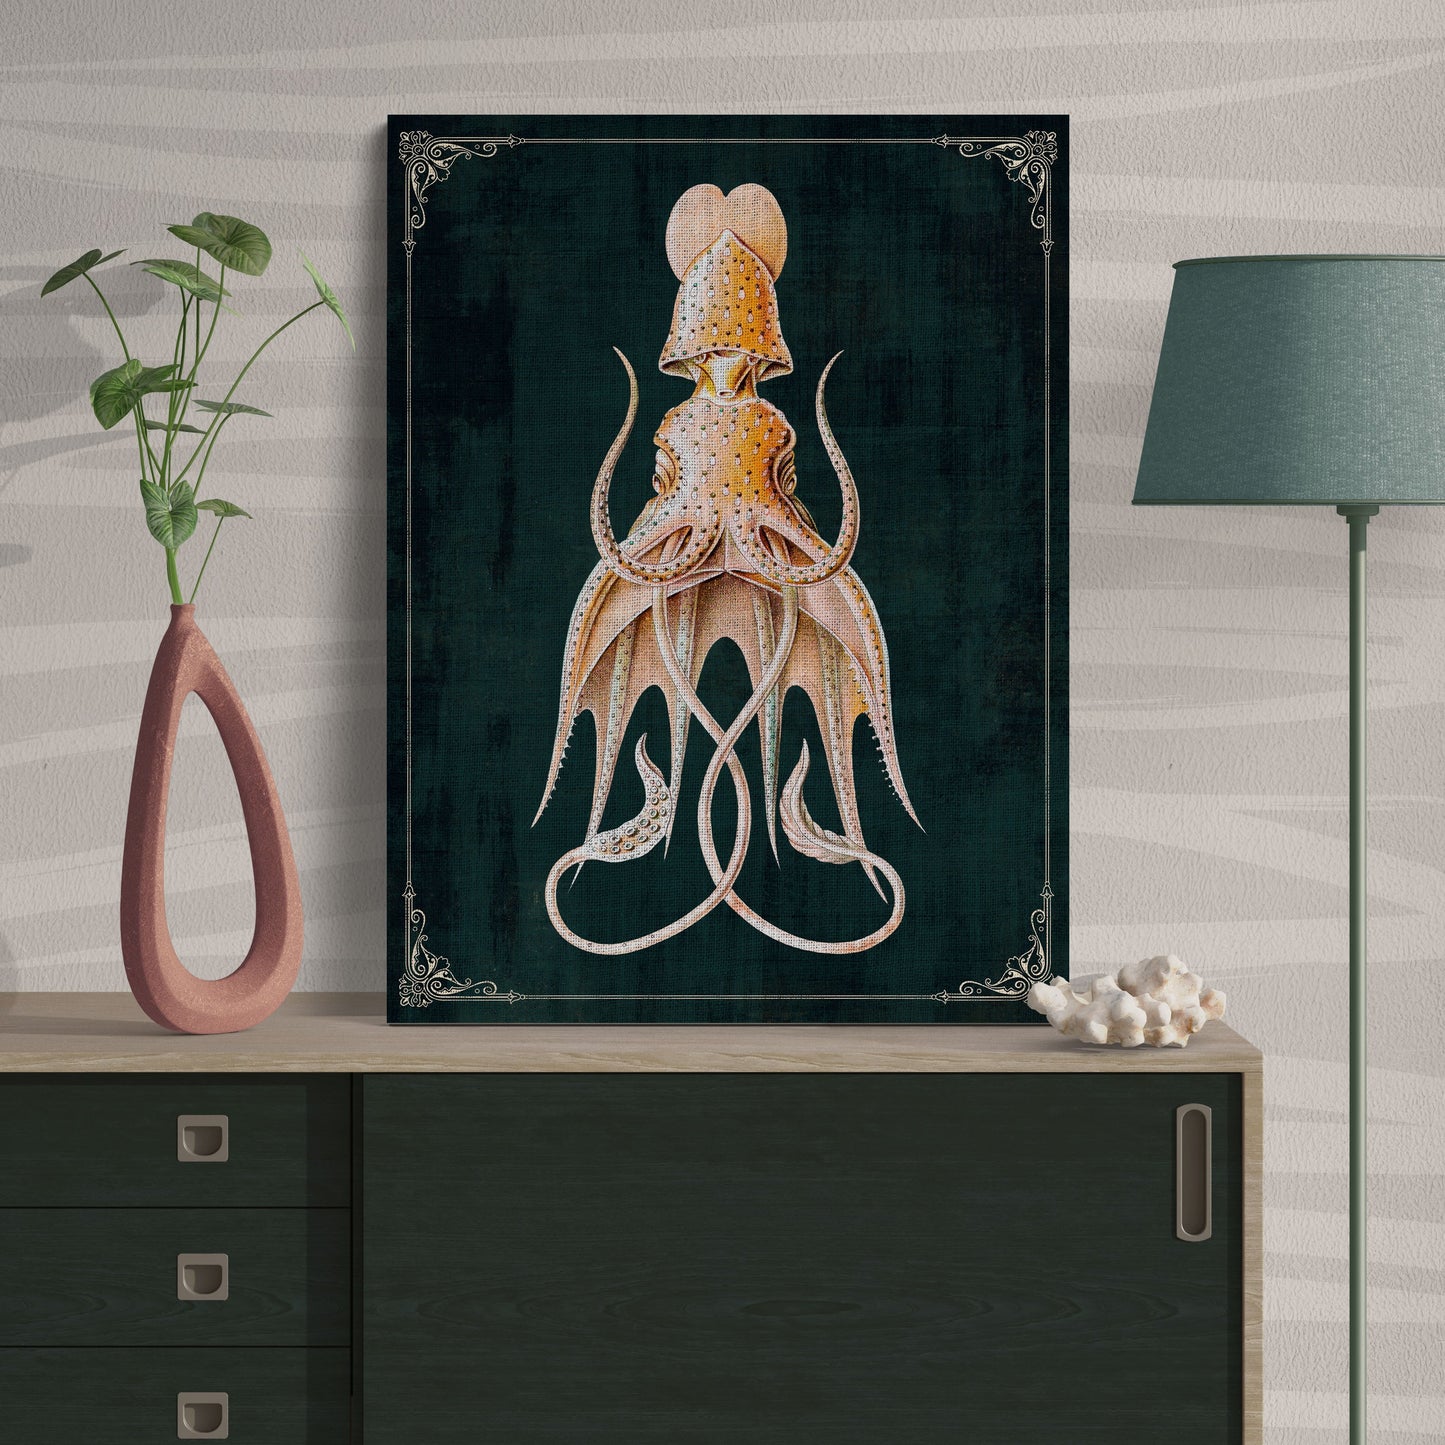 Gamochonia Trichterkraken Octopus Vintage Deep Sea Ocean Wall Art - Retro Reverence